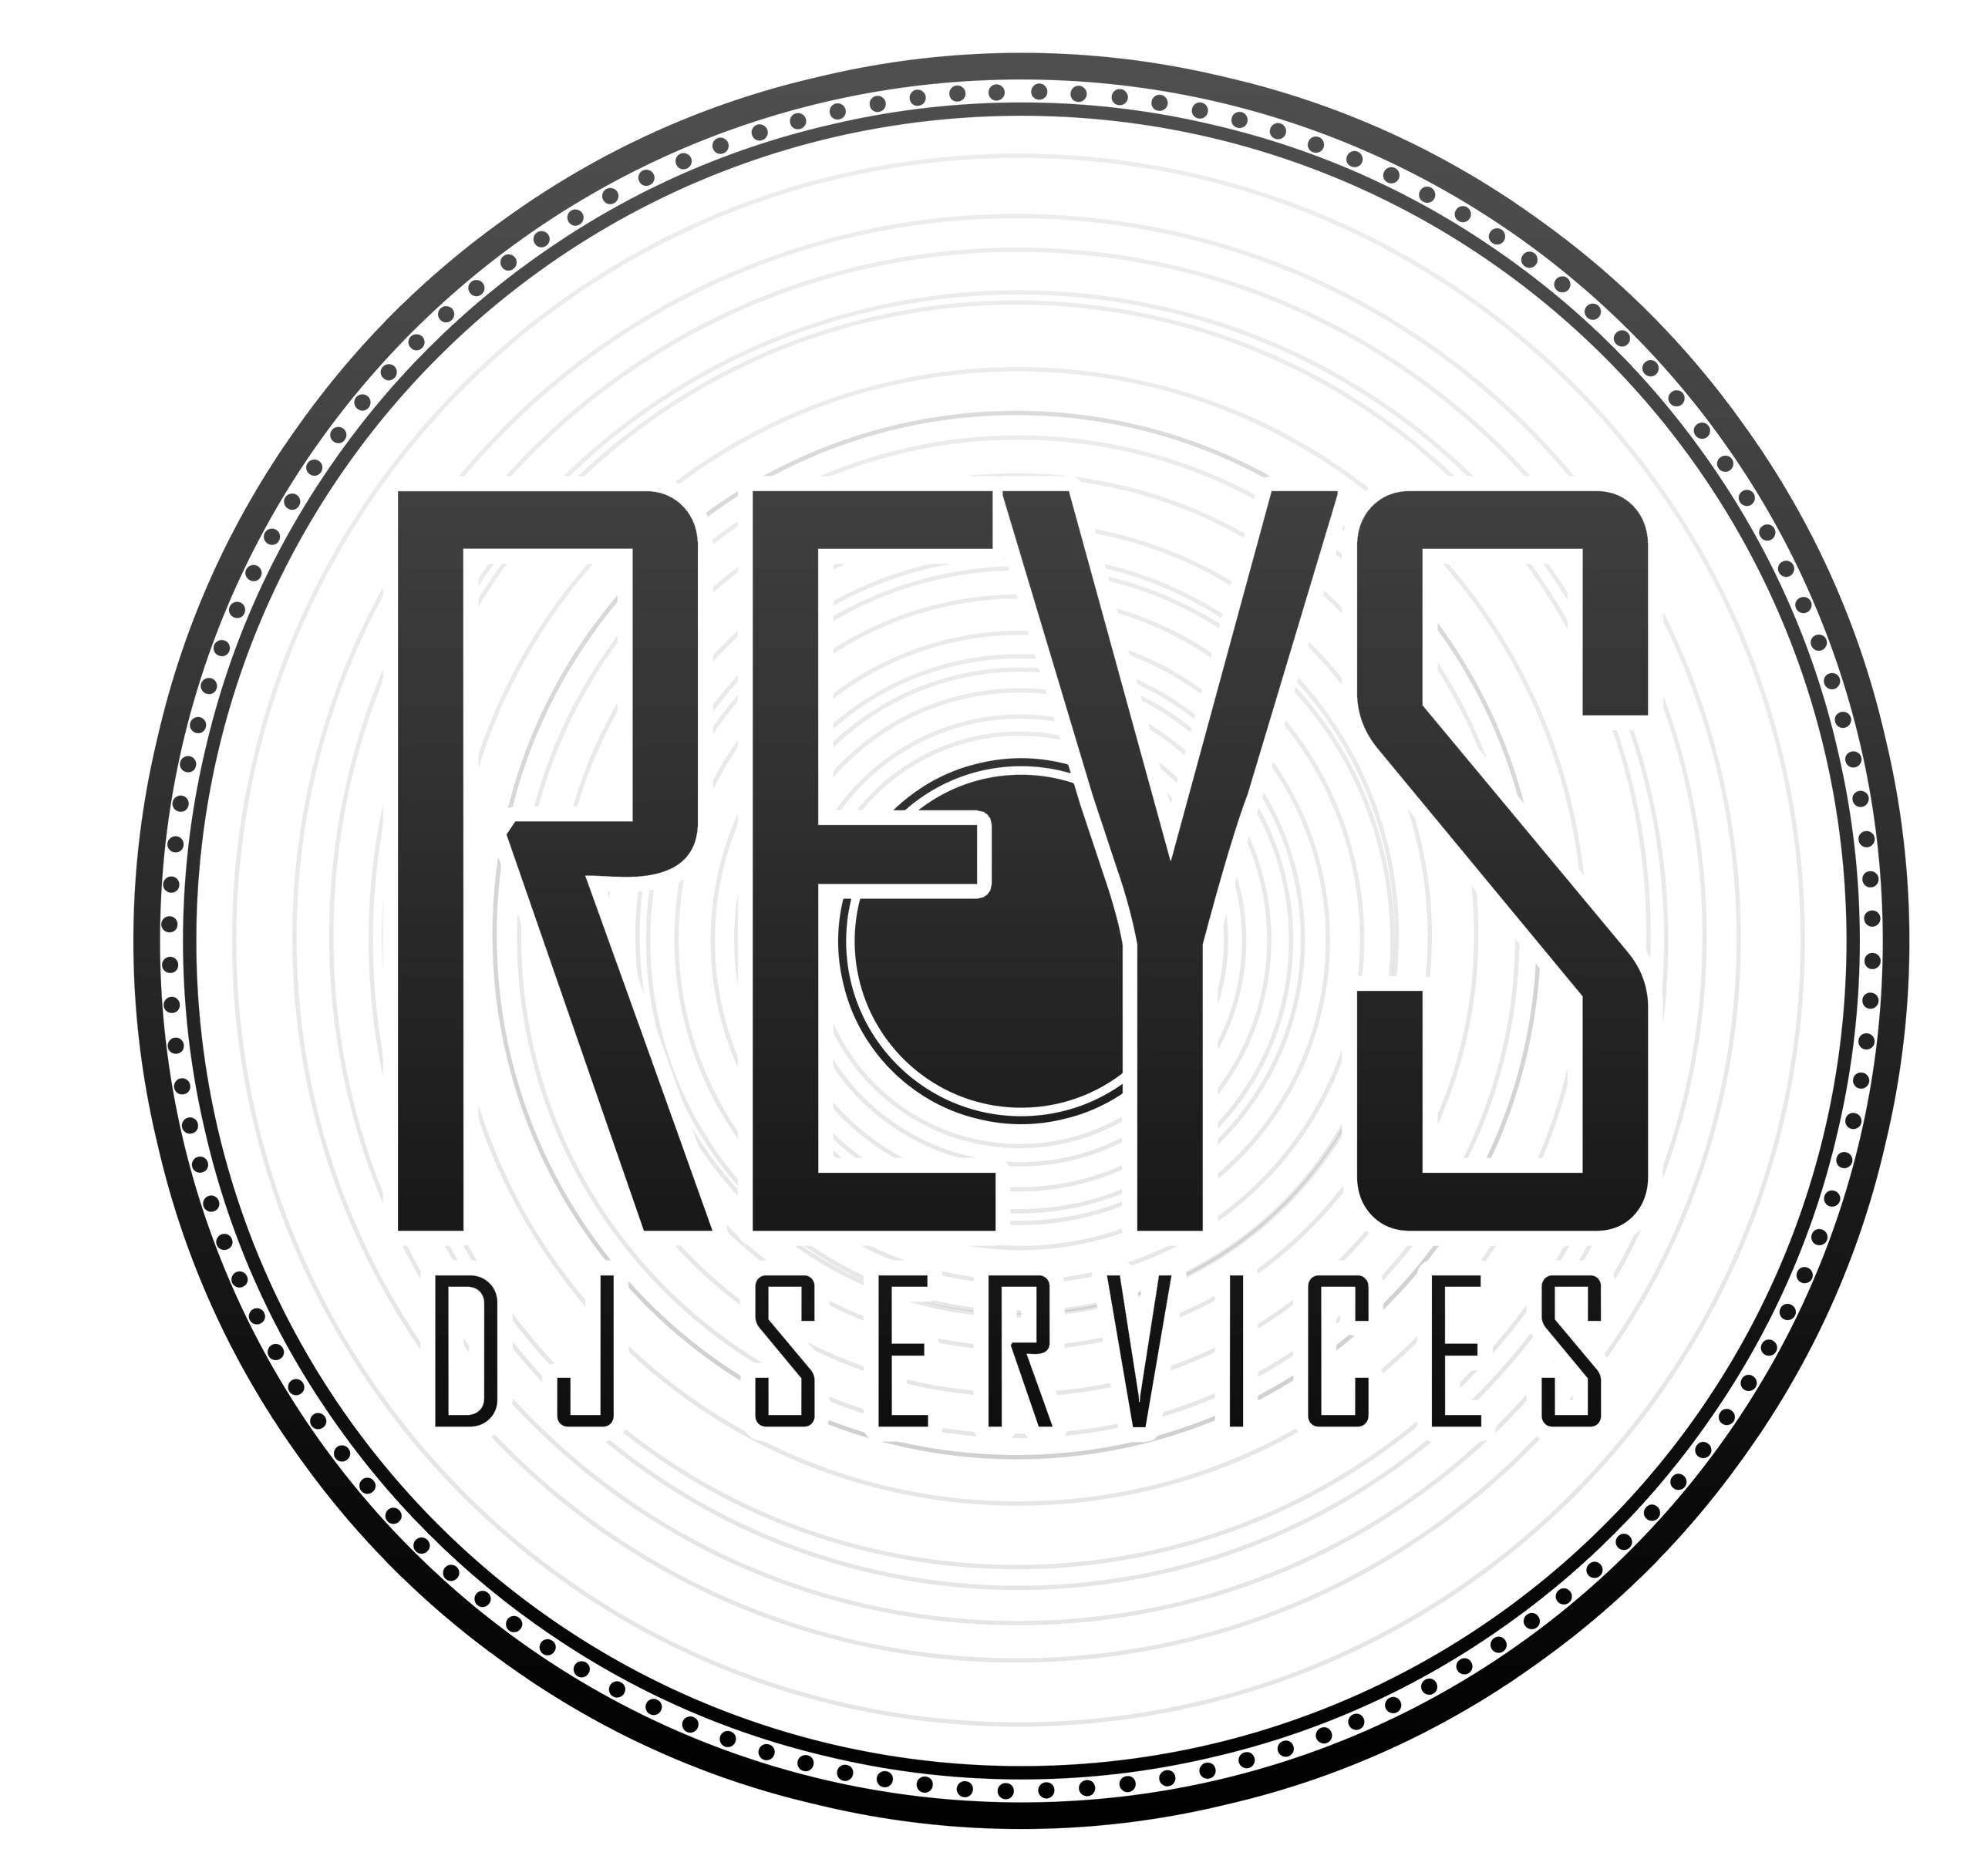 Rey's DJ Services